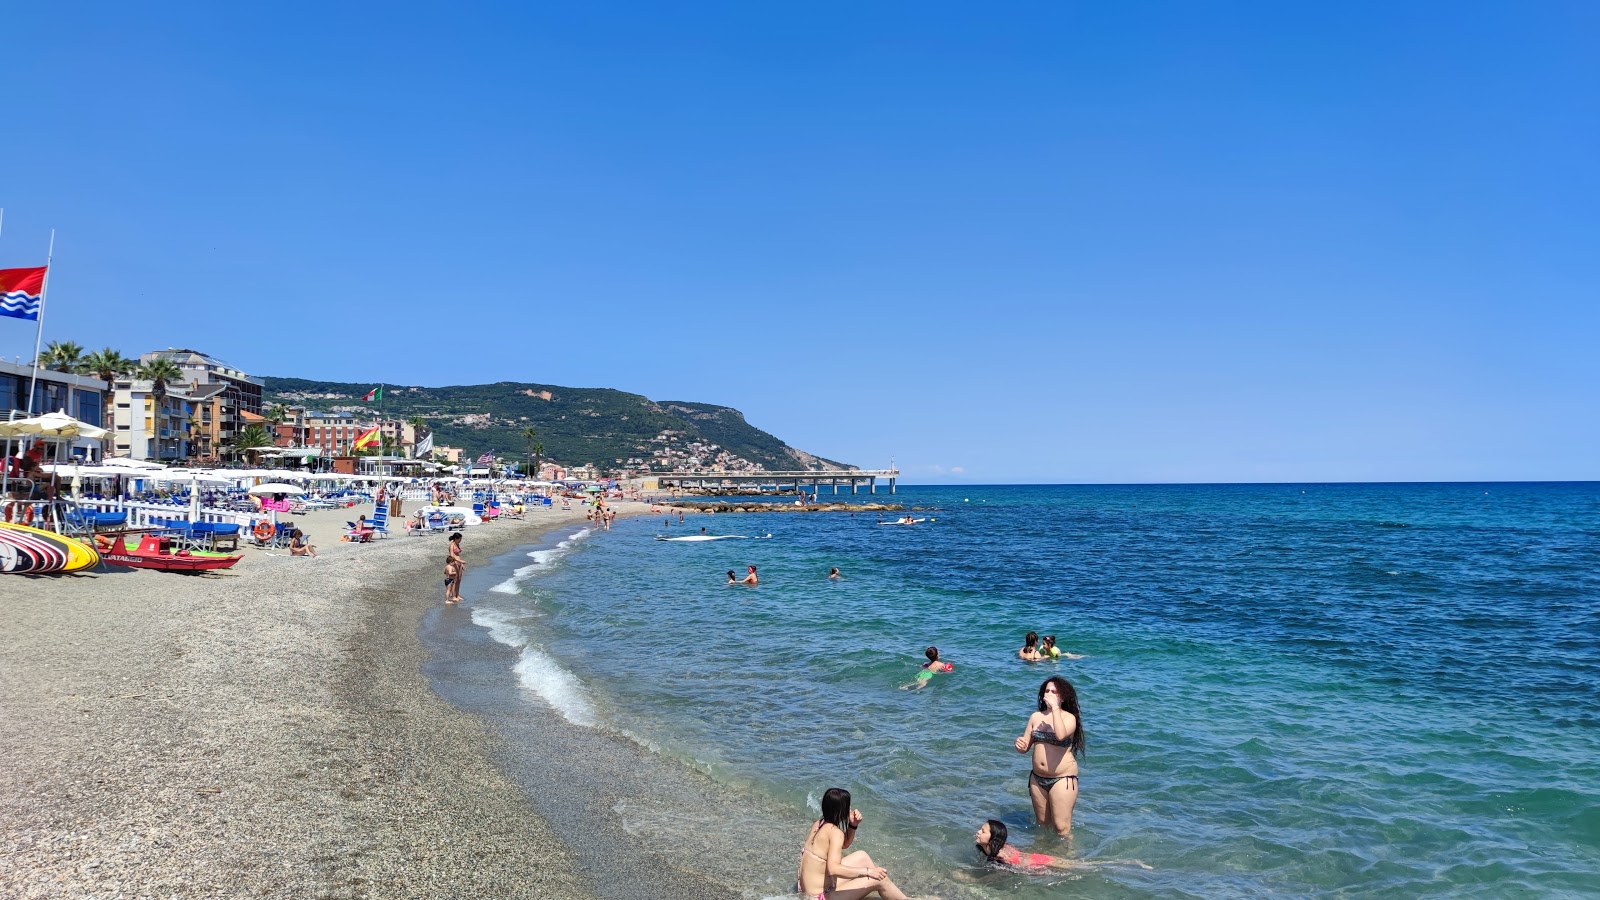 Spiaggia di Don Giovanni Bado'in fotoğrafı gri kum yüzey ile